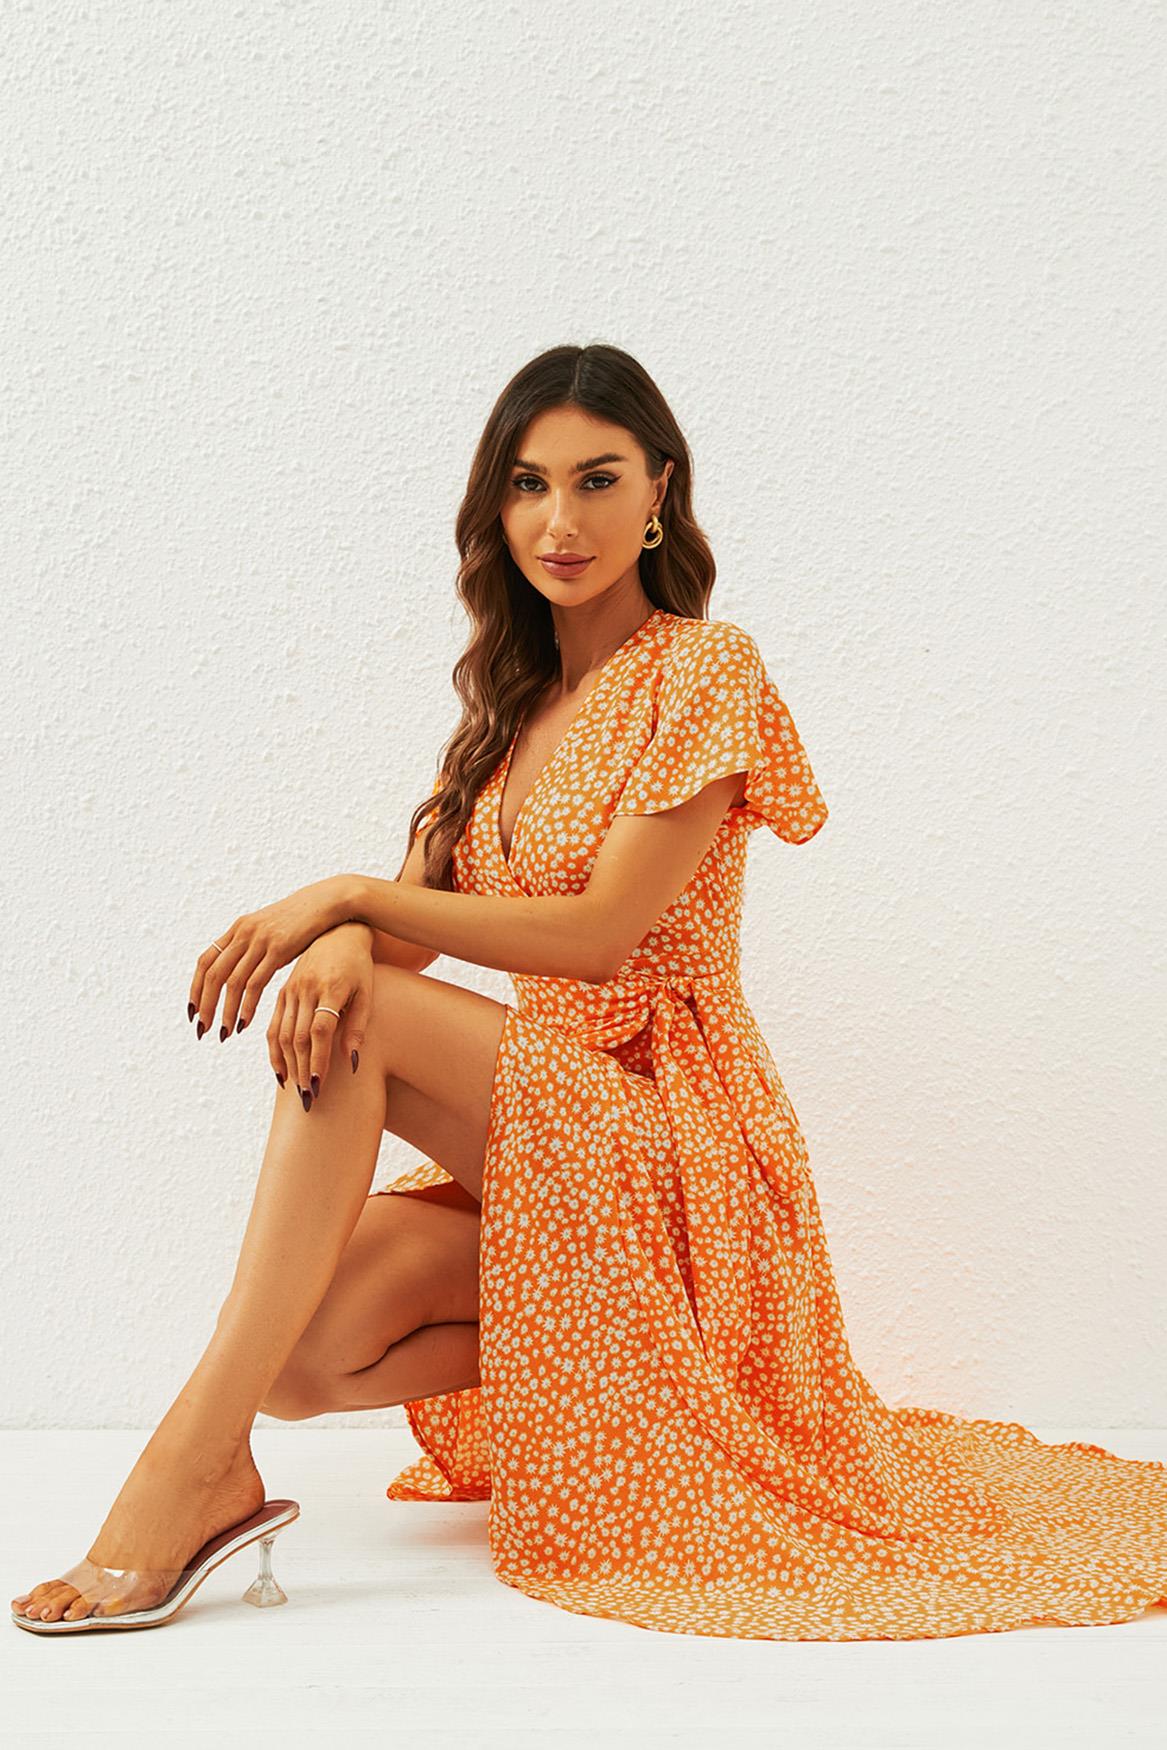 Floral Print Wrap Midi Dress In Orange Yellow FS553